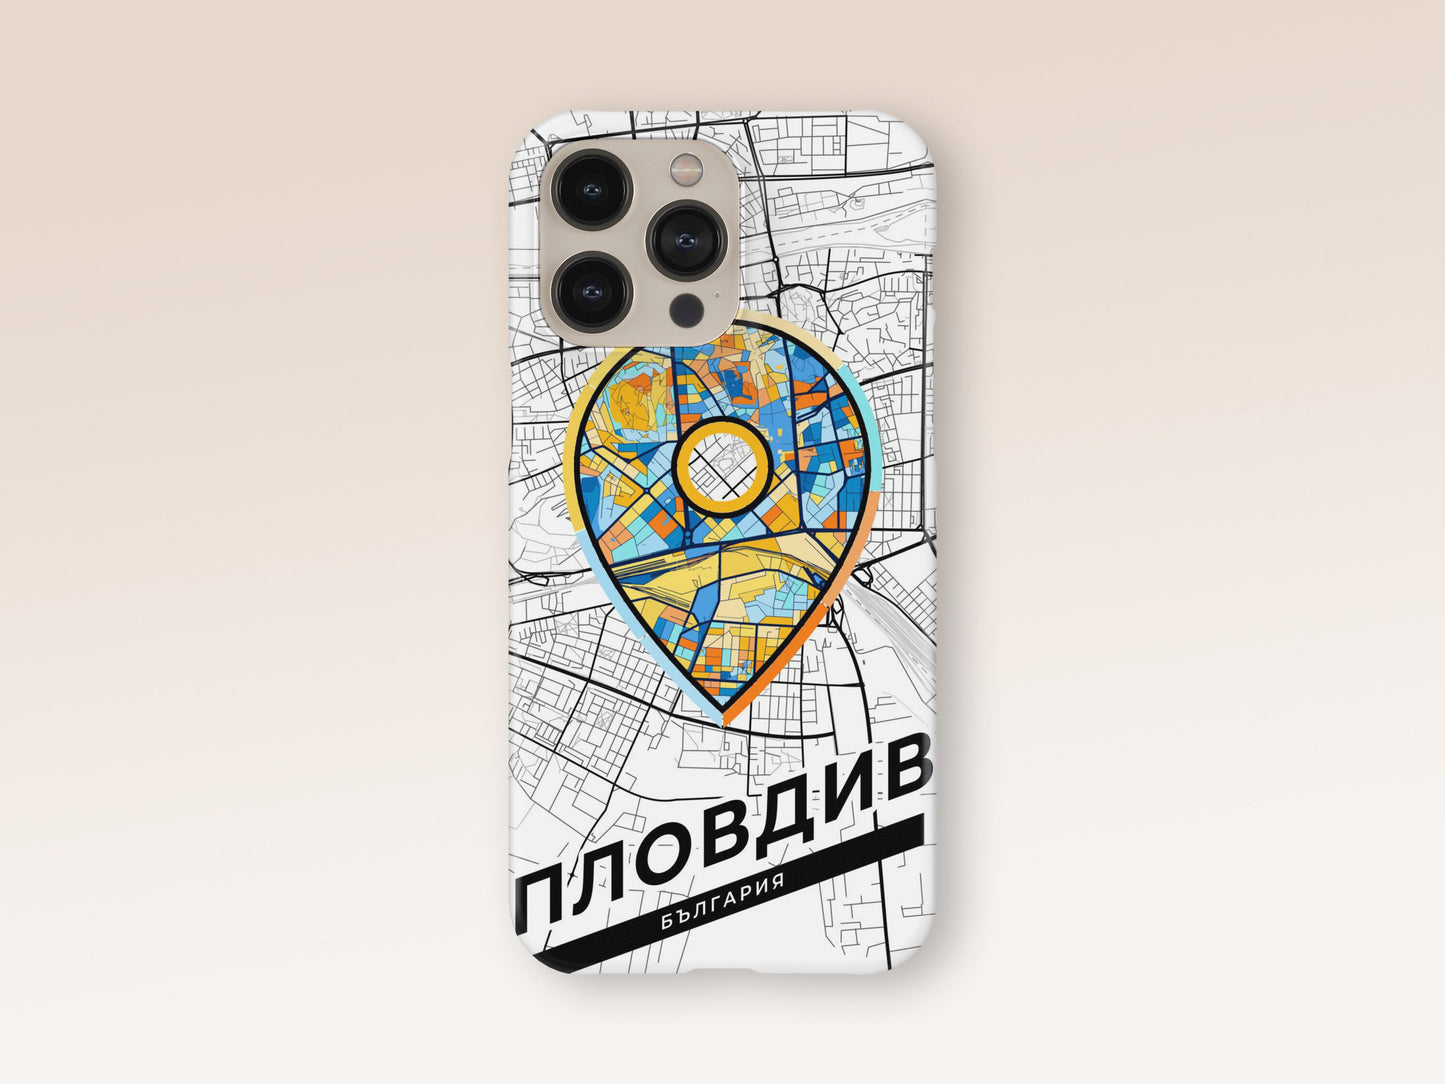 Пловдив България slim phone case with colorful icon. Birthday, wedding or housewarming gift. Couple match cases. 1